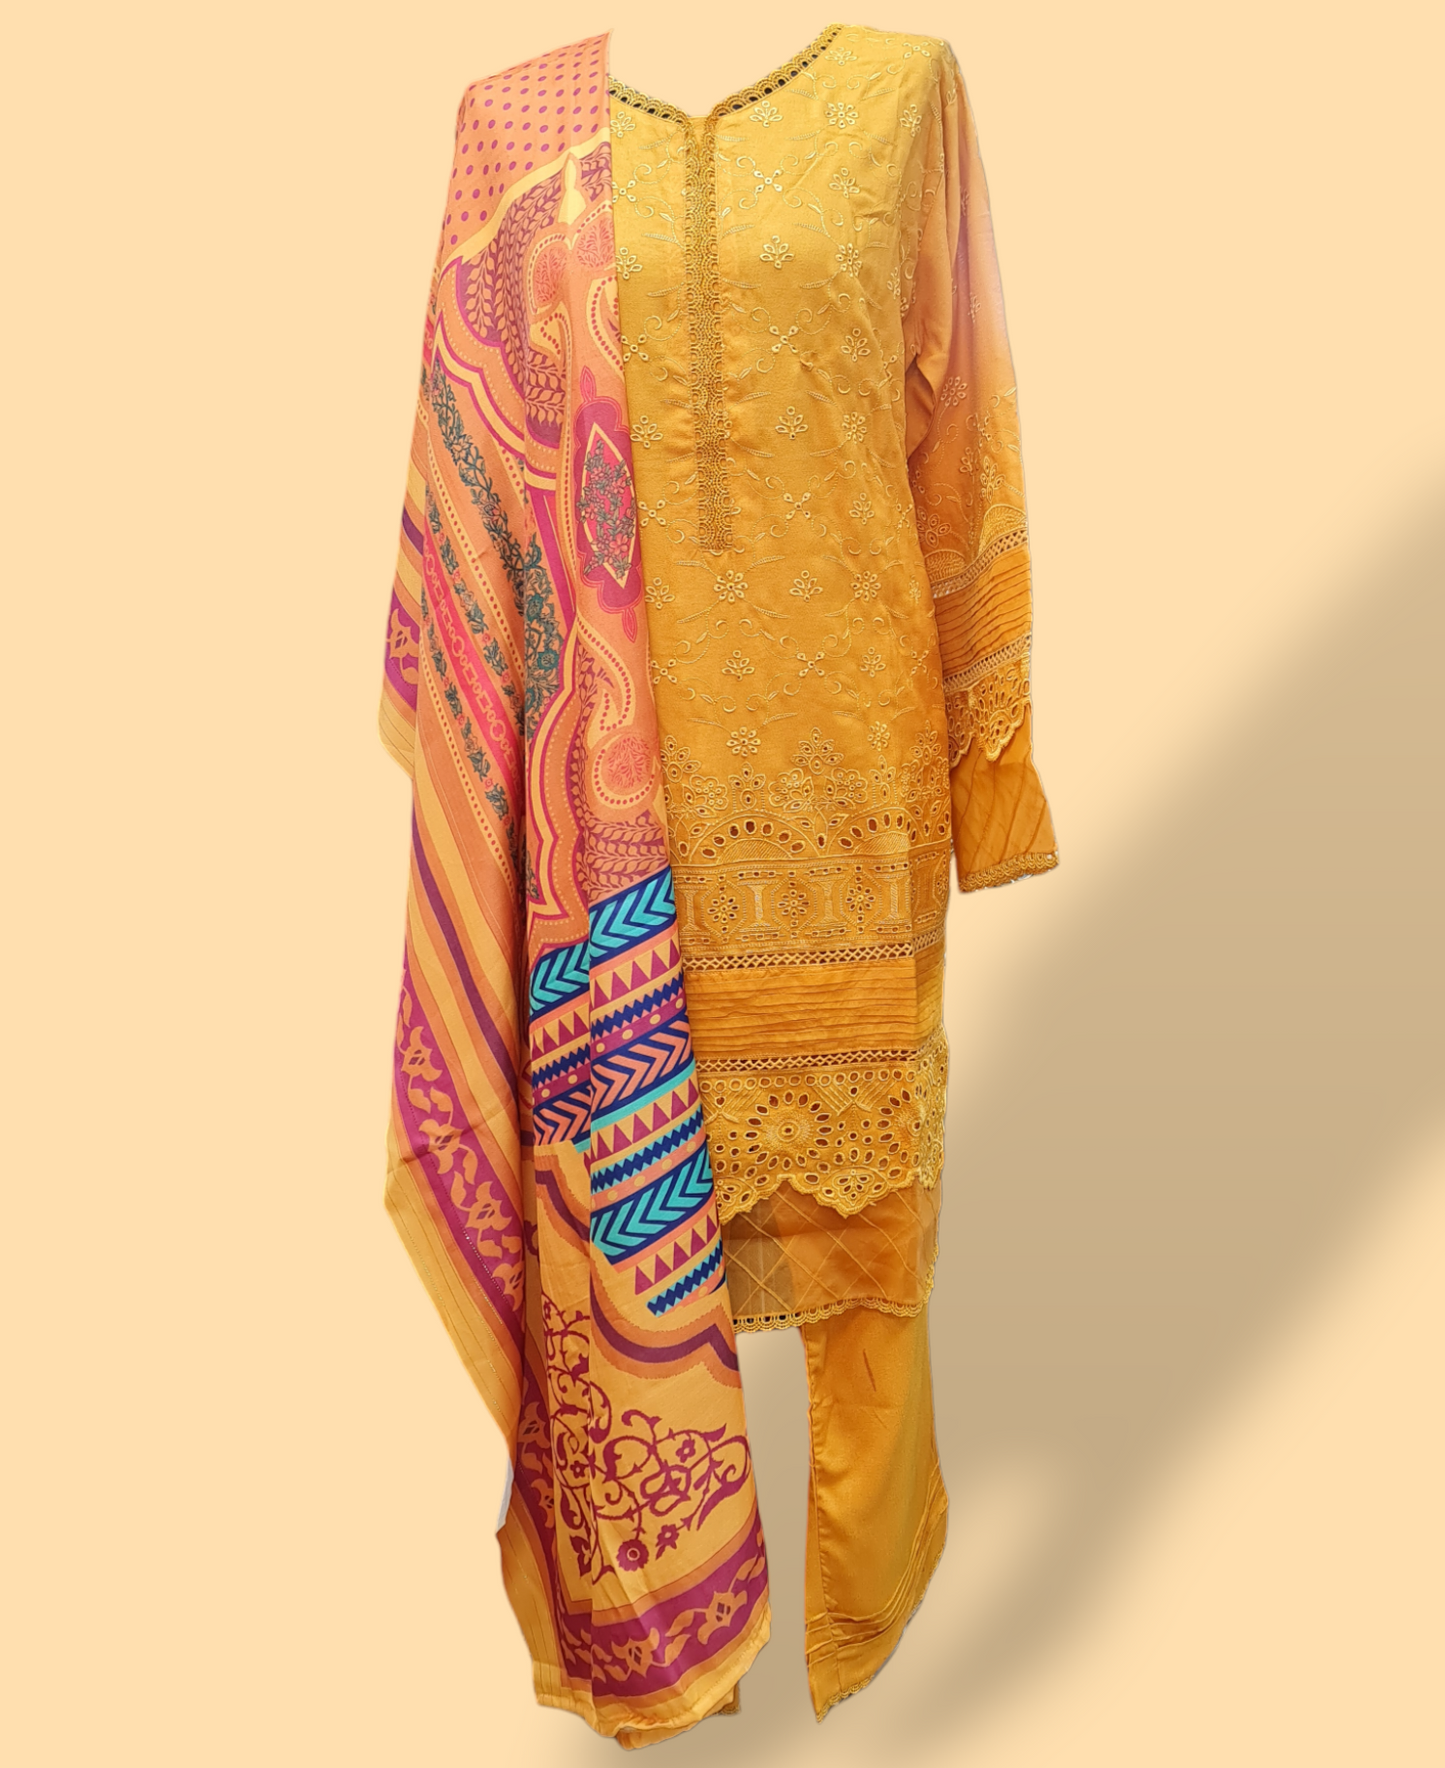 Yellow Dhanak Suit